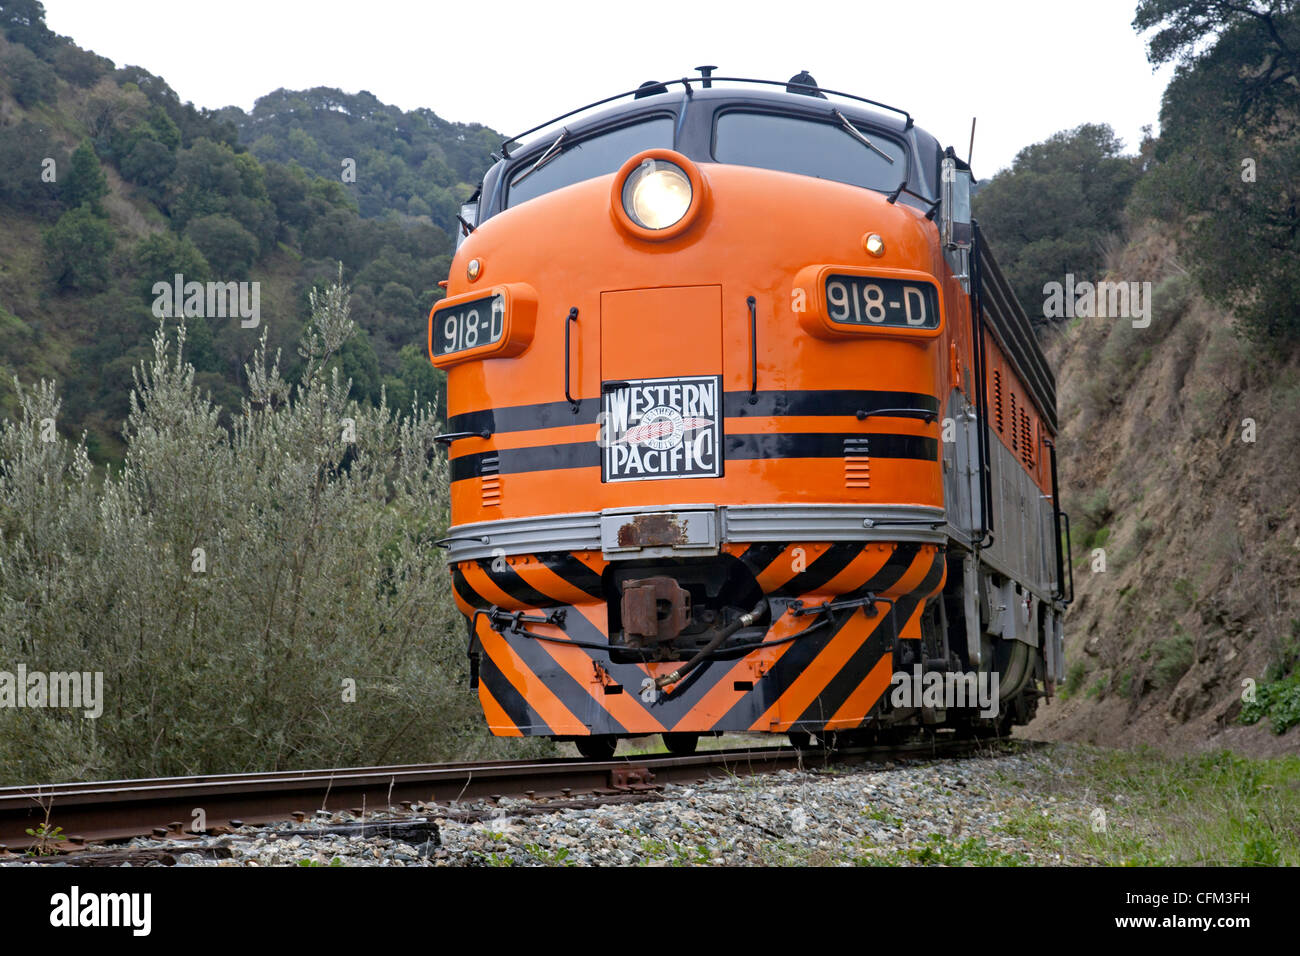 Western Pacific locomotive 918D in Niles Canyon near Sunol, California. Stock Photo